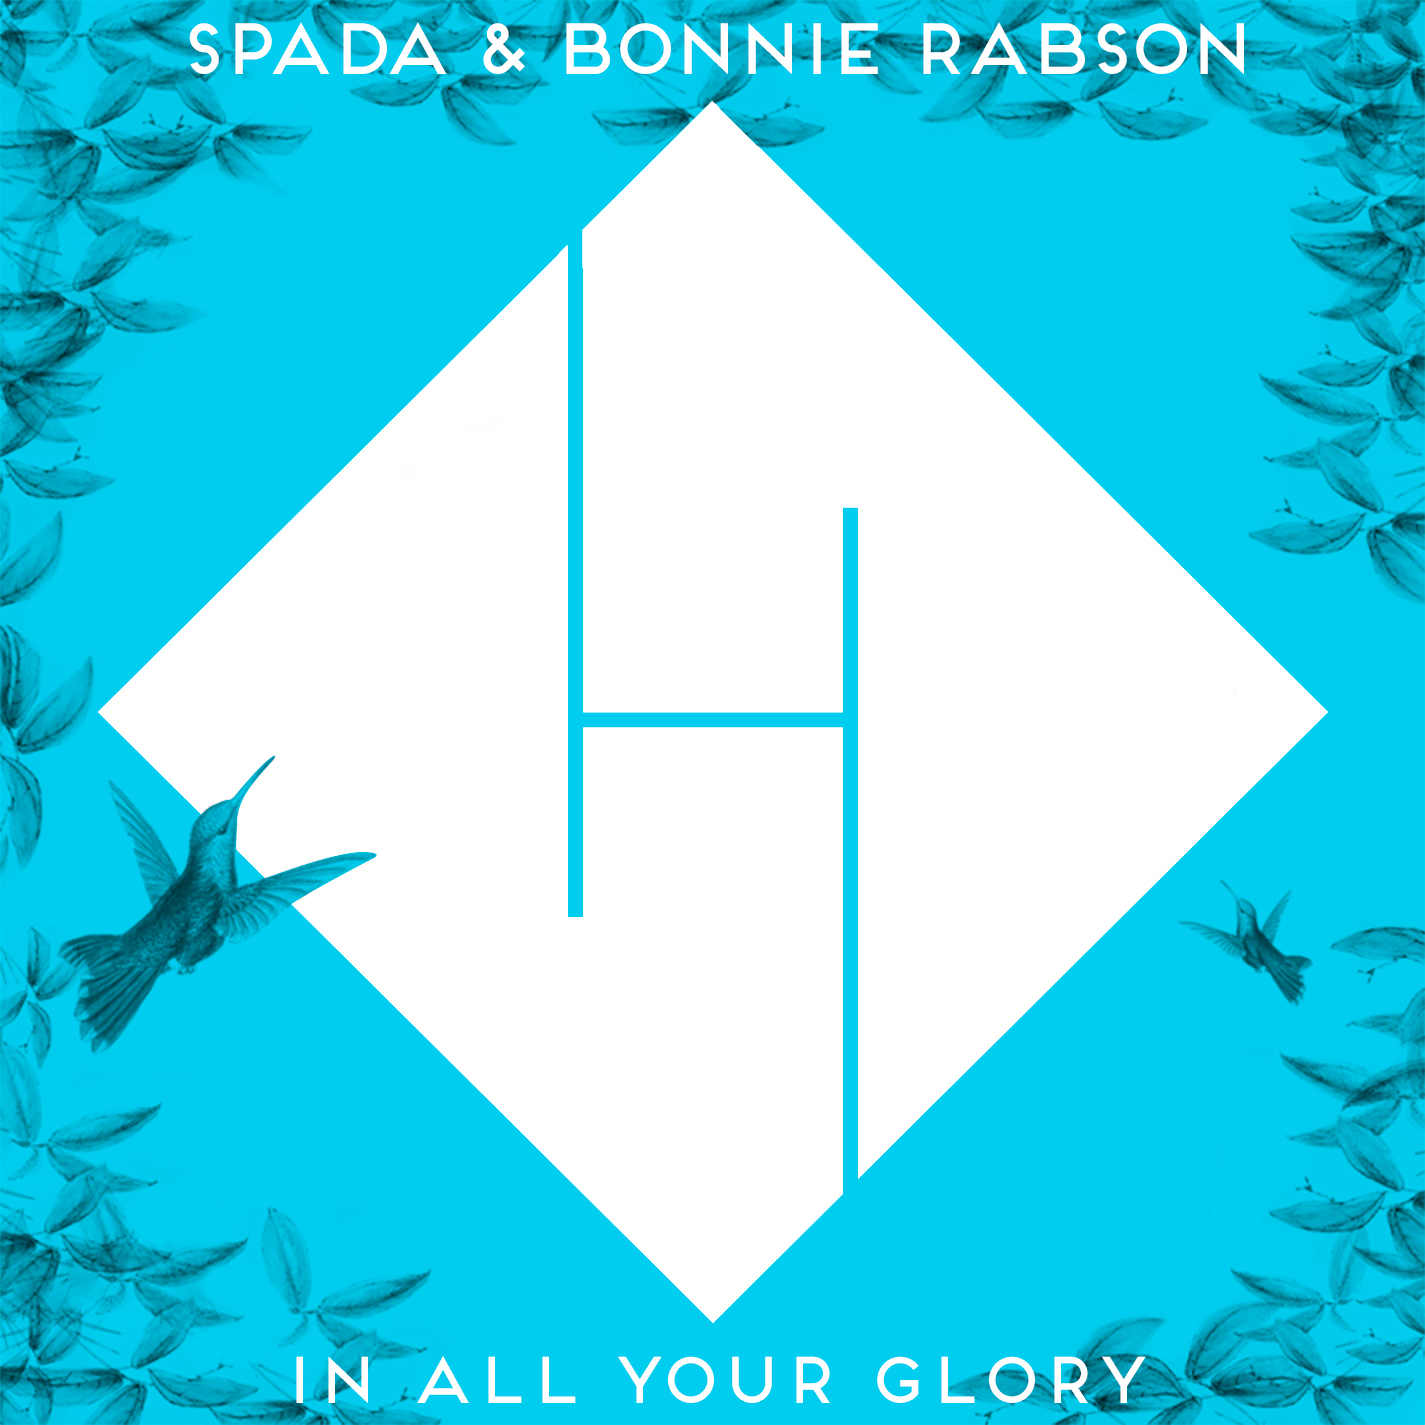 Download In All Your Glory - Spada & Bonnie Rabson (Remix Boris Brejcha) PREVIEW